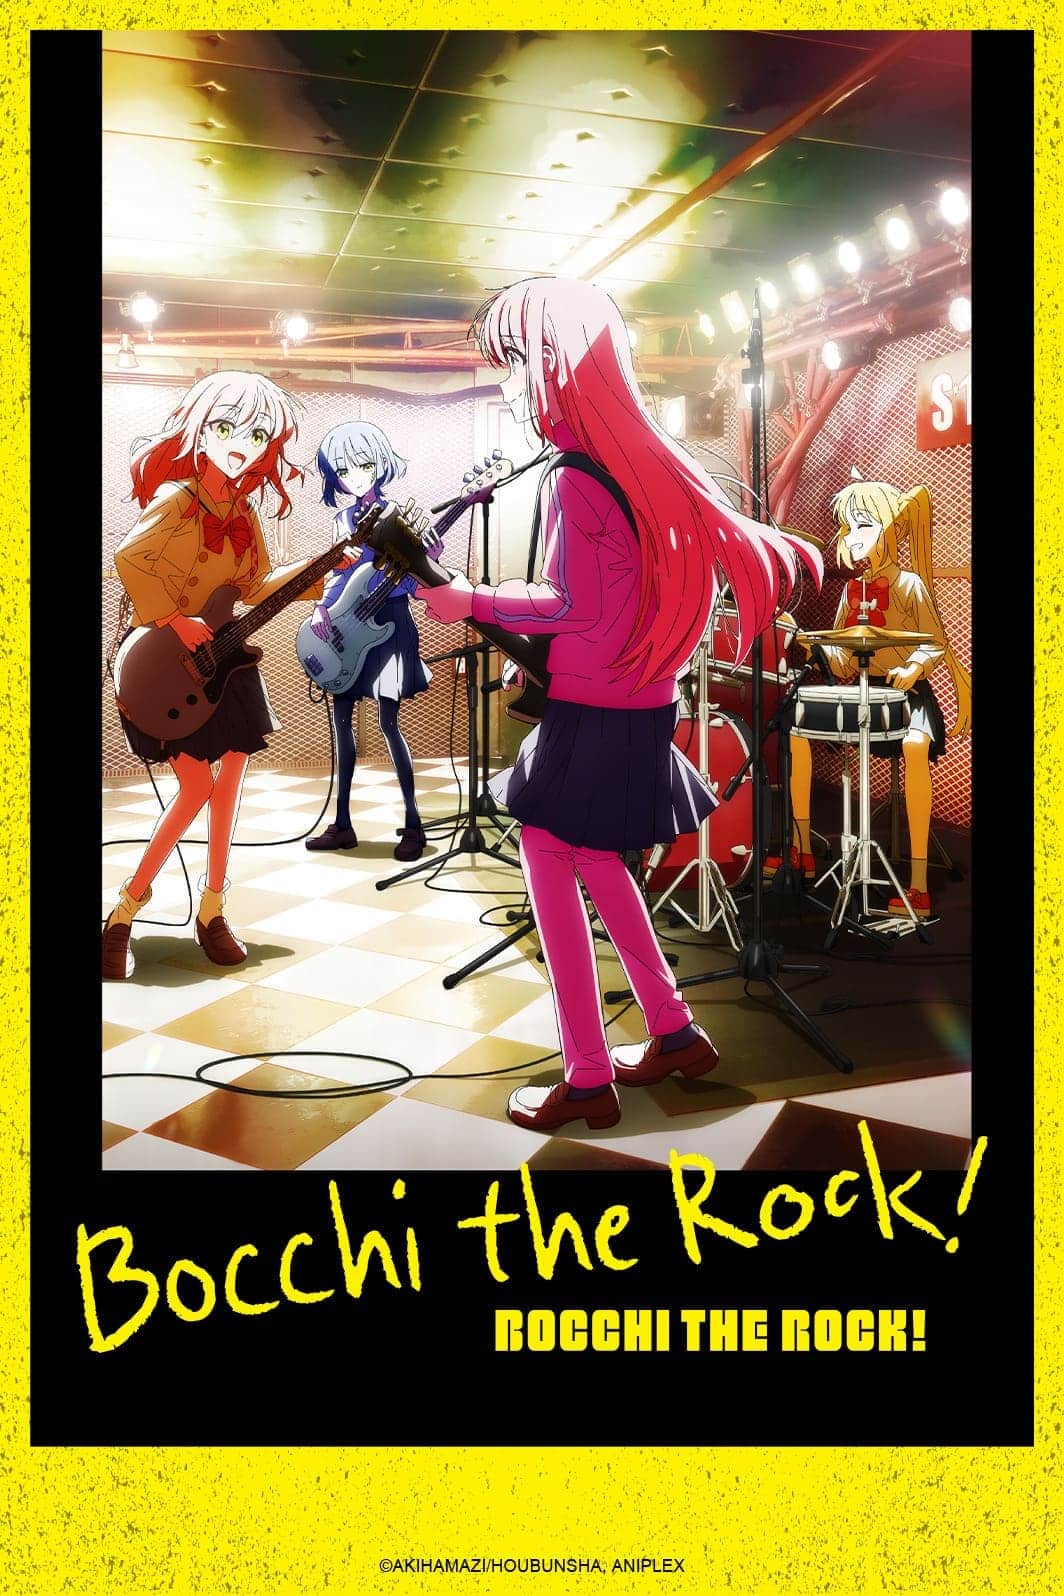 Bocchitherock Visual Crunchyroll